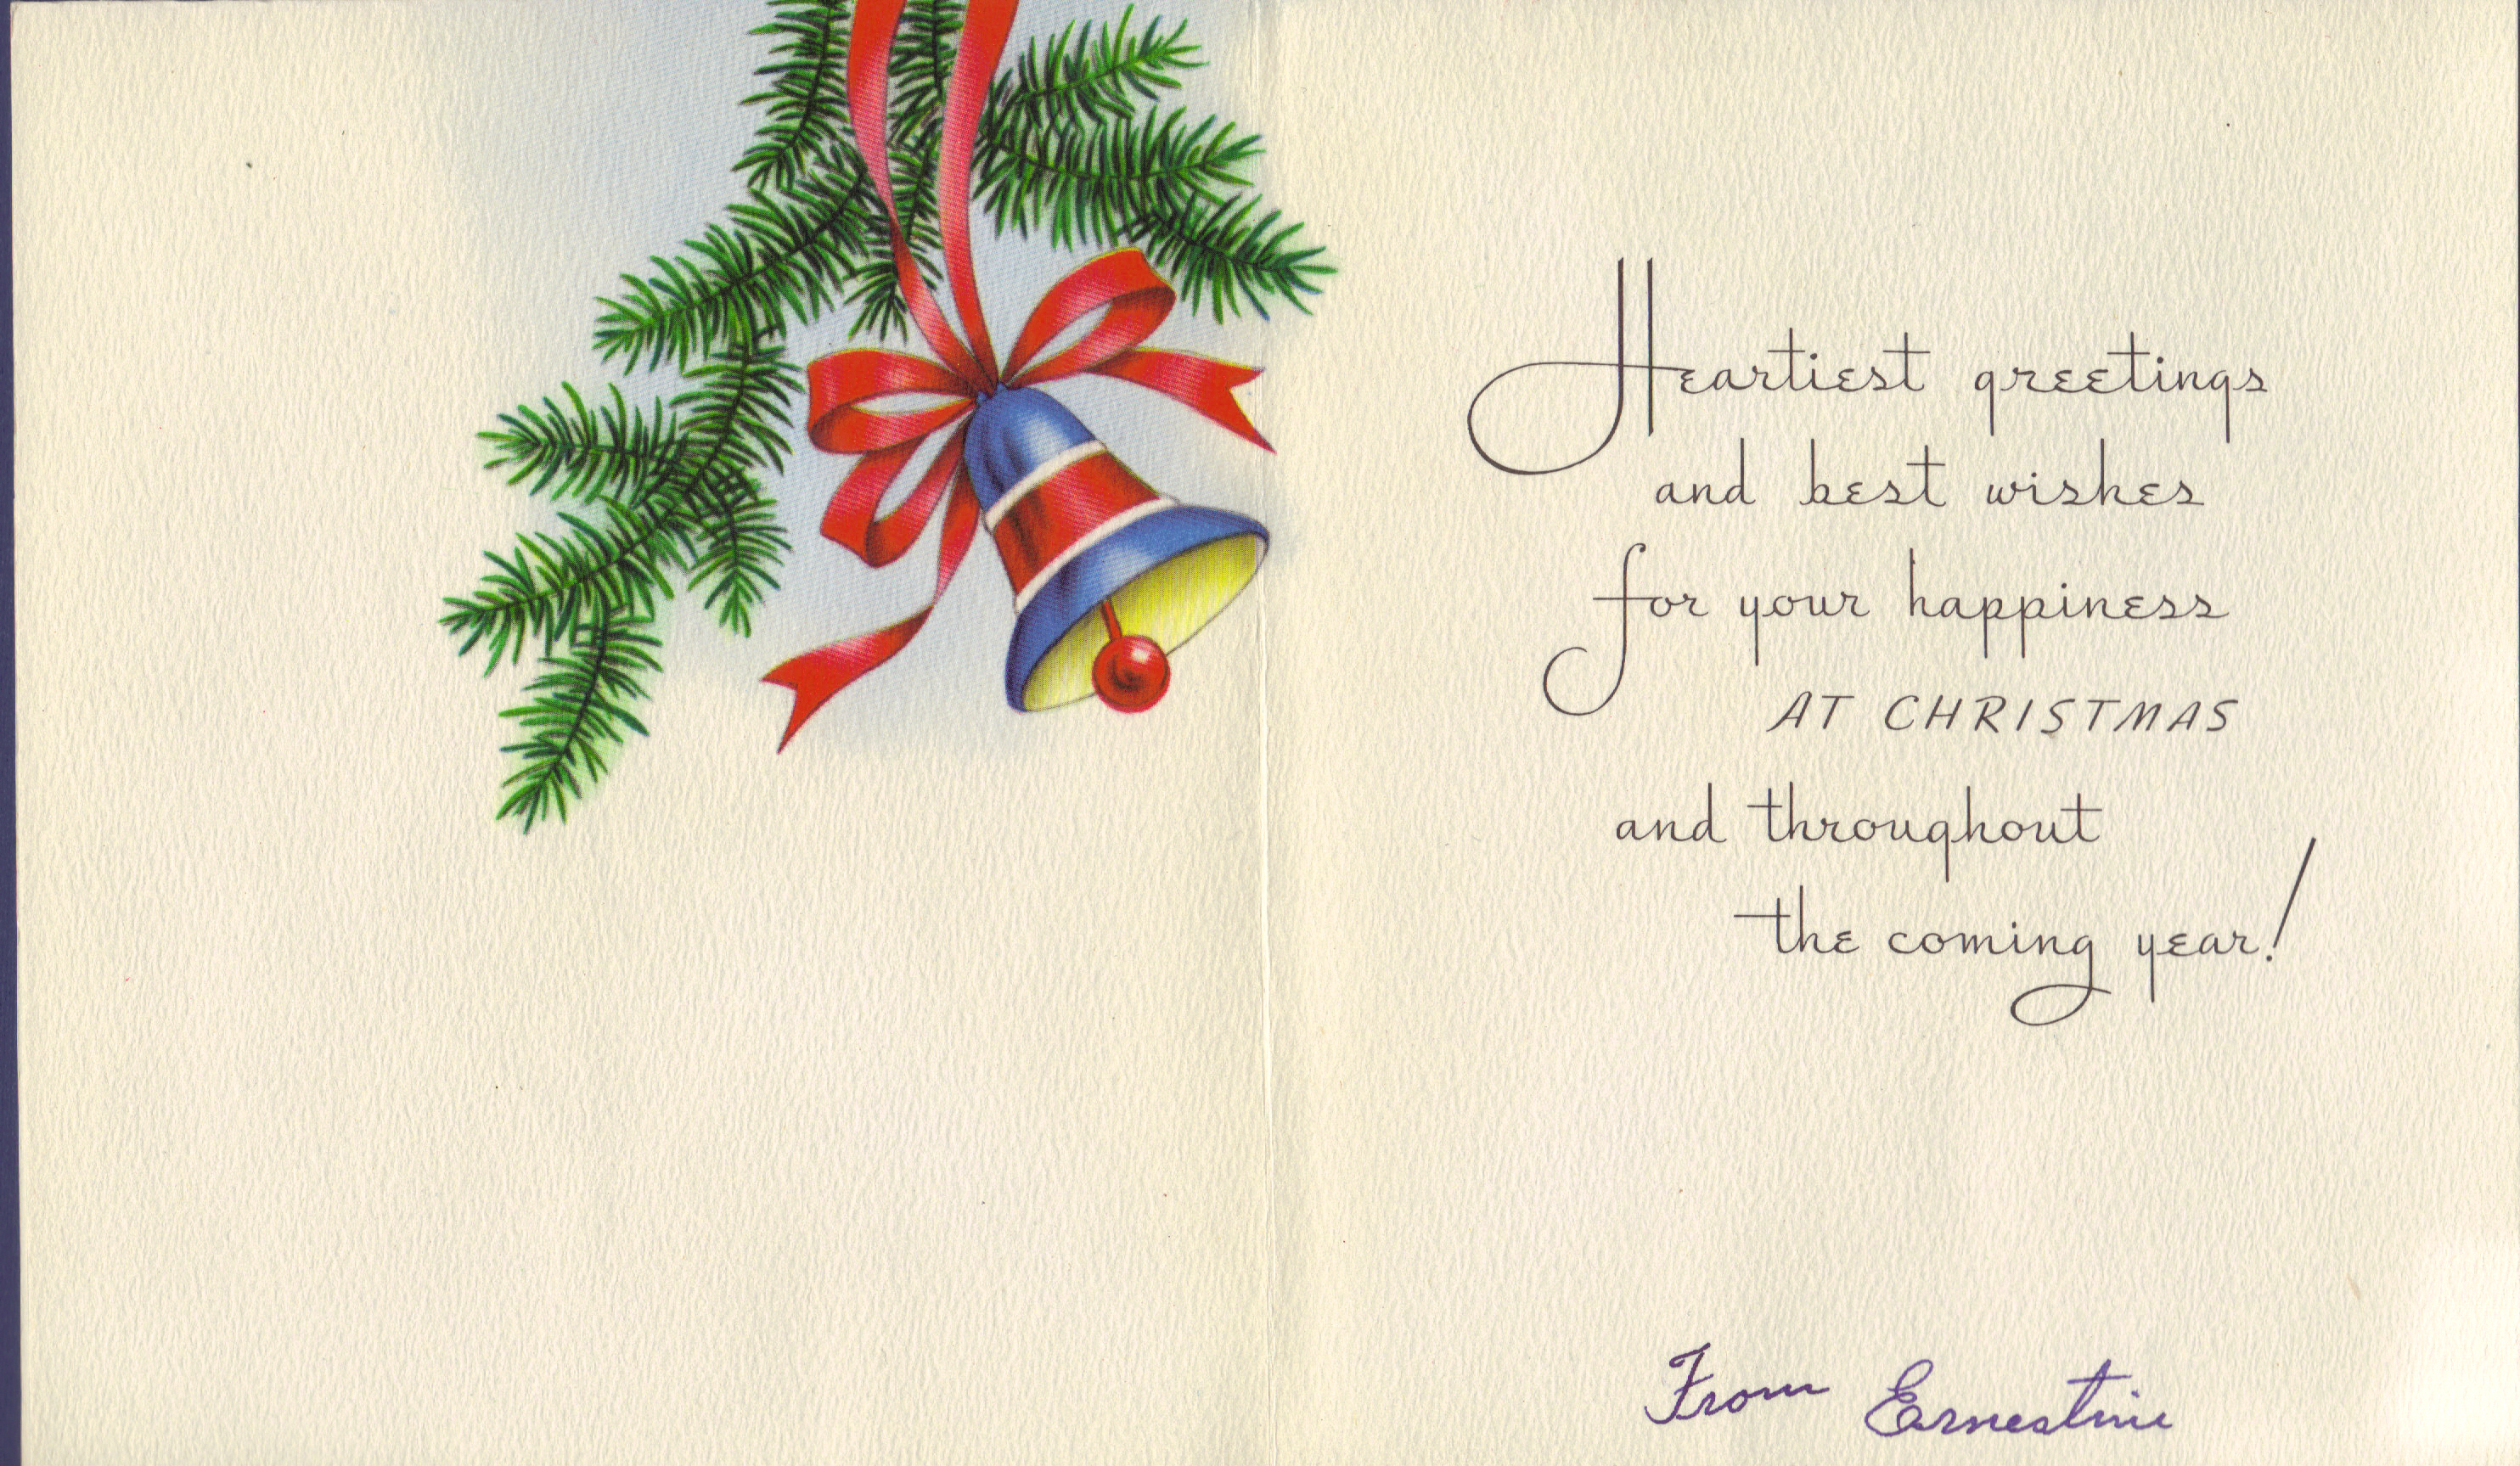 Unique Christmas Greeting Cards 2019 ” Happy Holiday Season” | Greetingsforchristmas